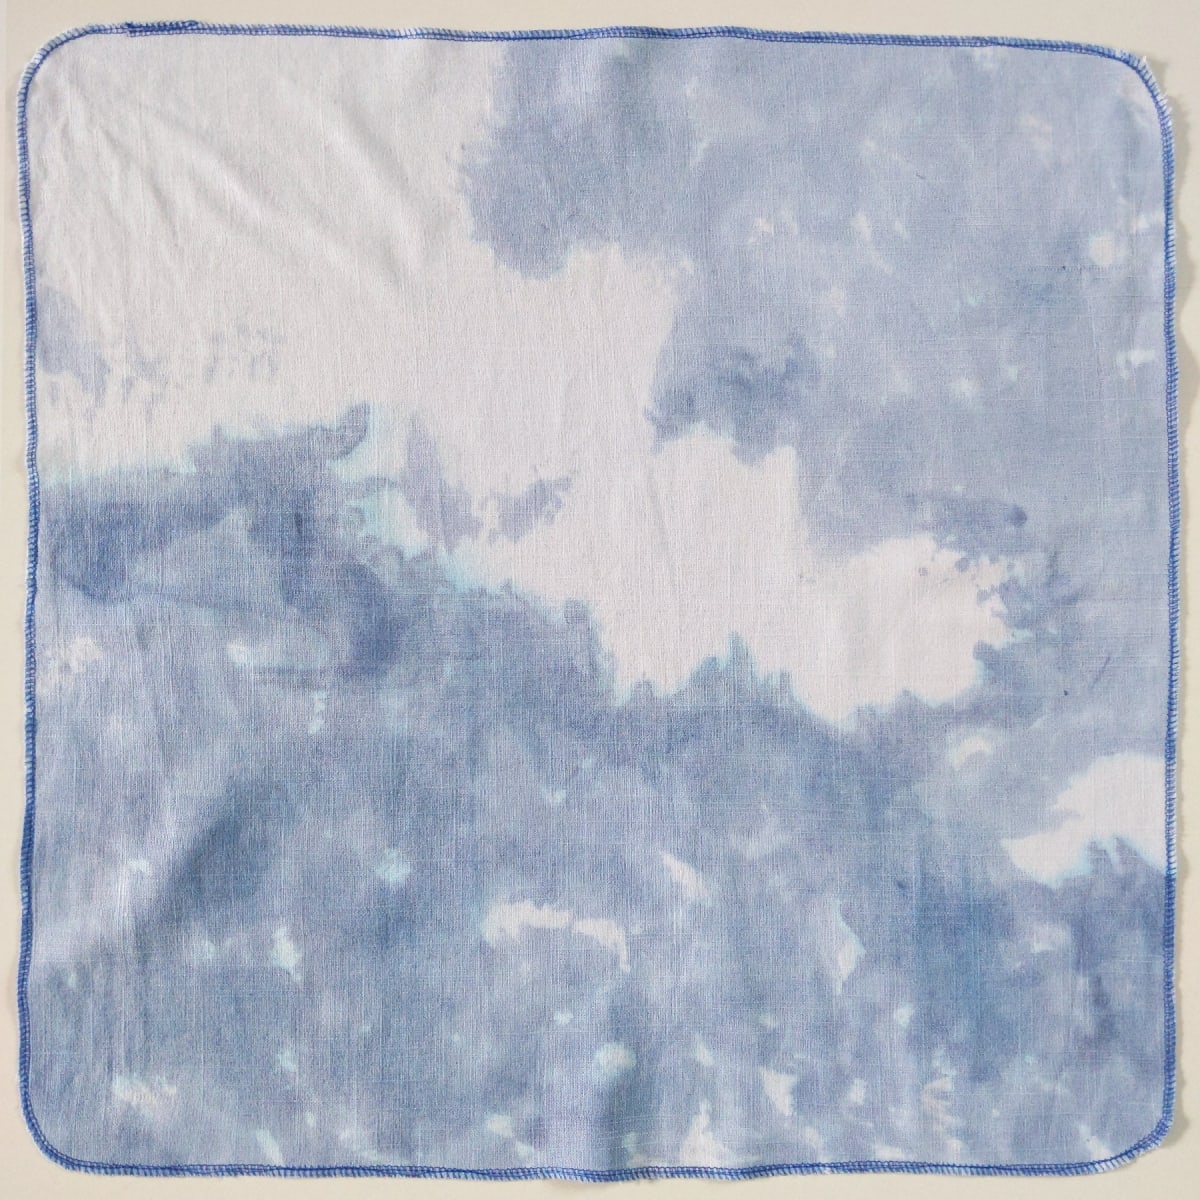 Cloud dyed napkins #10 by Savannah Jubic 